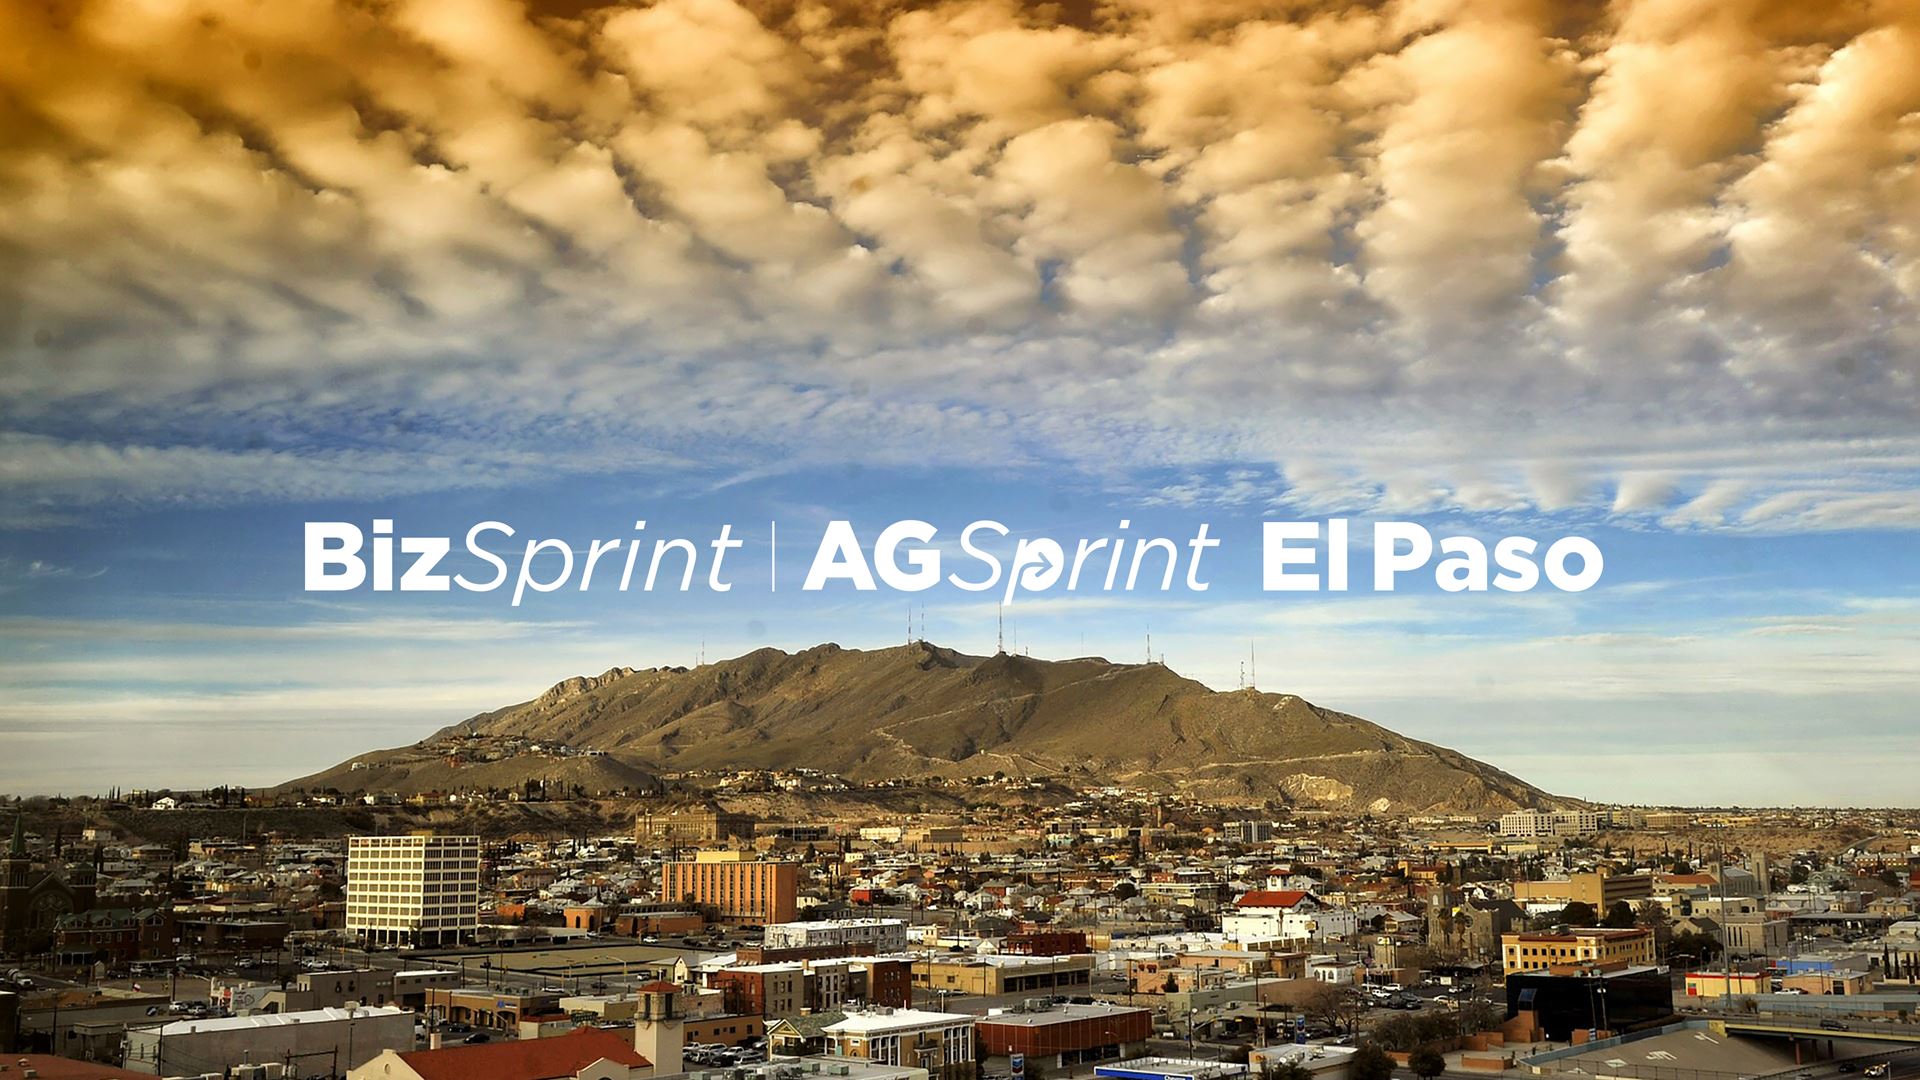 NMSU Arrowhead Center, El Paso County partner to host two free business sprints